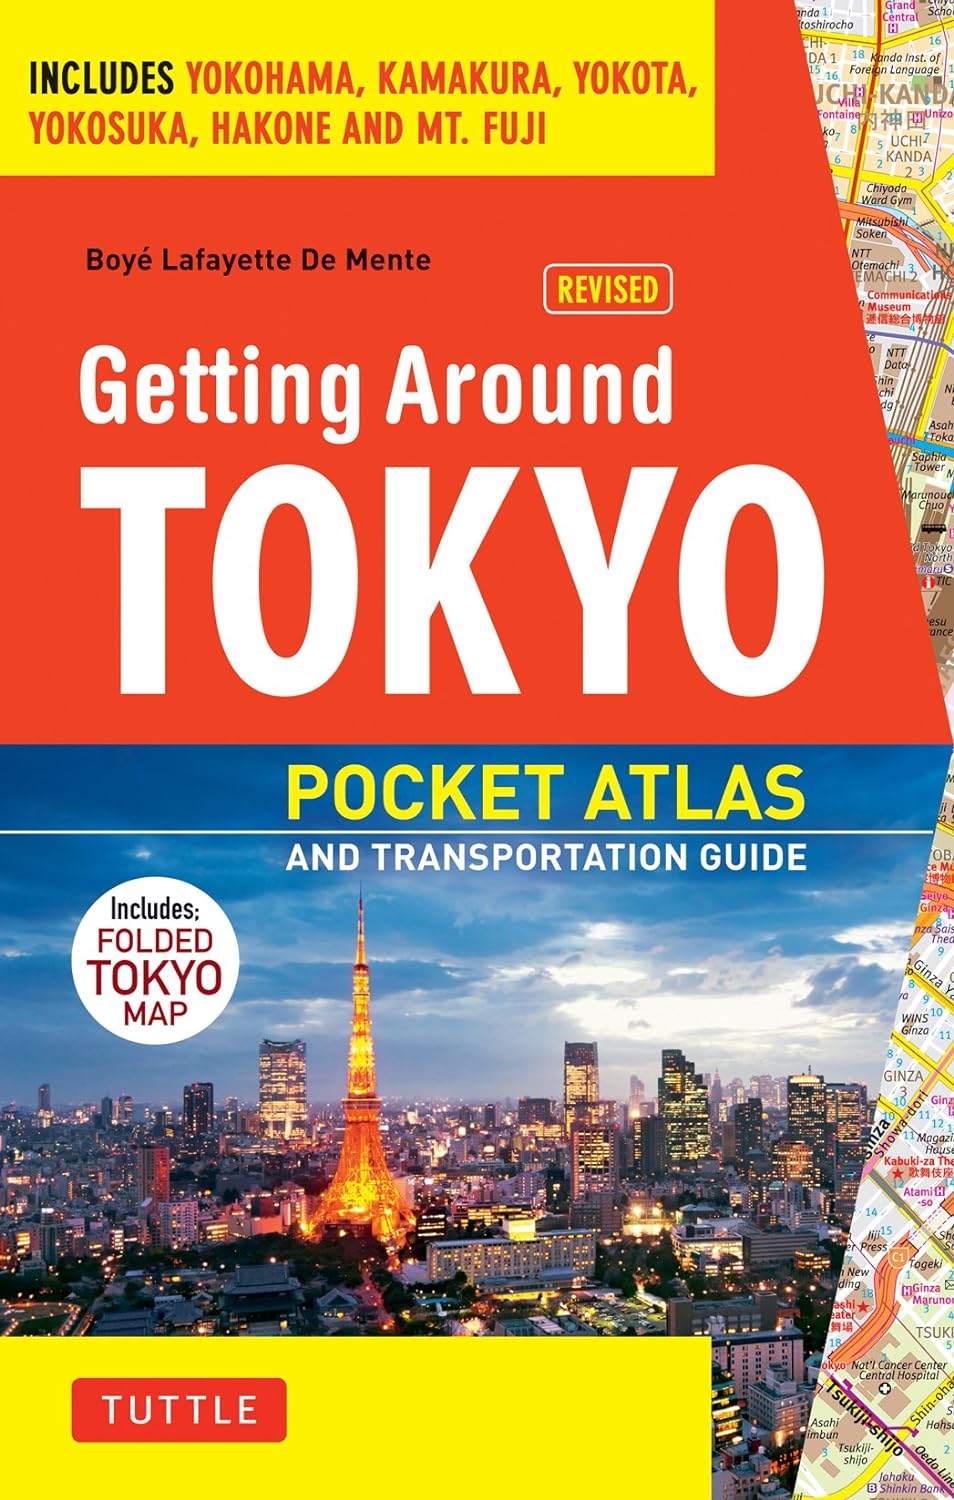 Getting around tokyo pocket atlas and transportation guide :  includes yokohama, kamakura, yokota, yokosuka, hakone and mt fuji